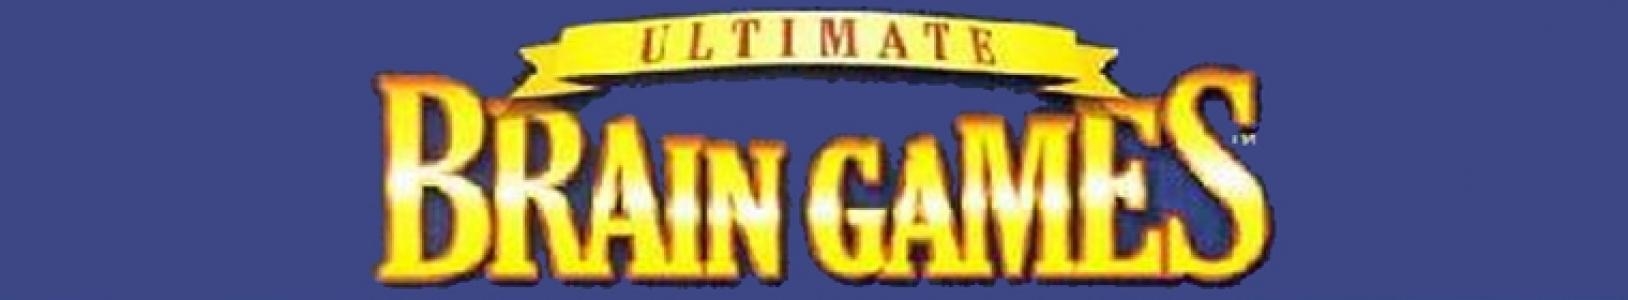 Ultimate Brain Games banner